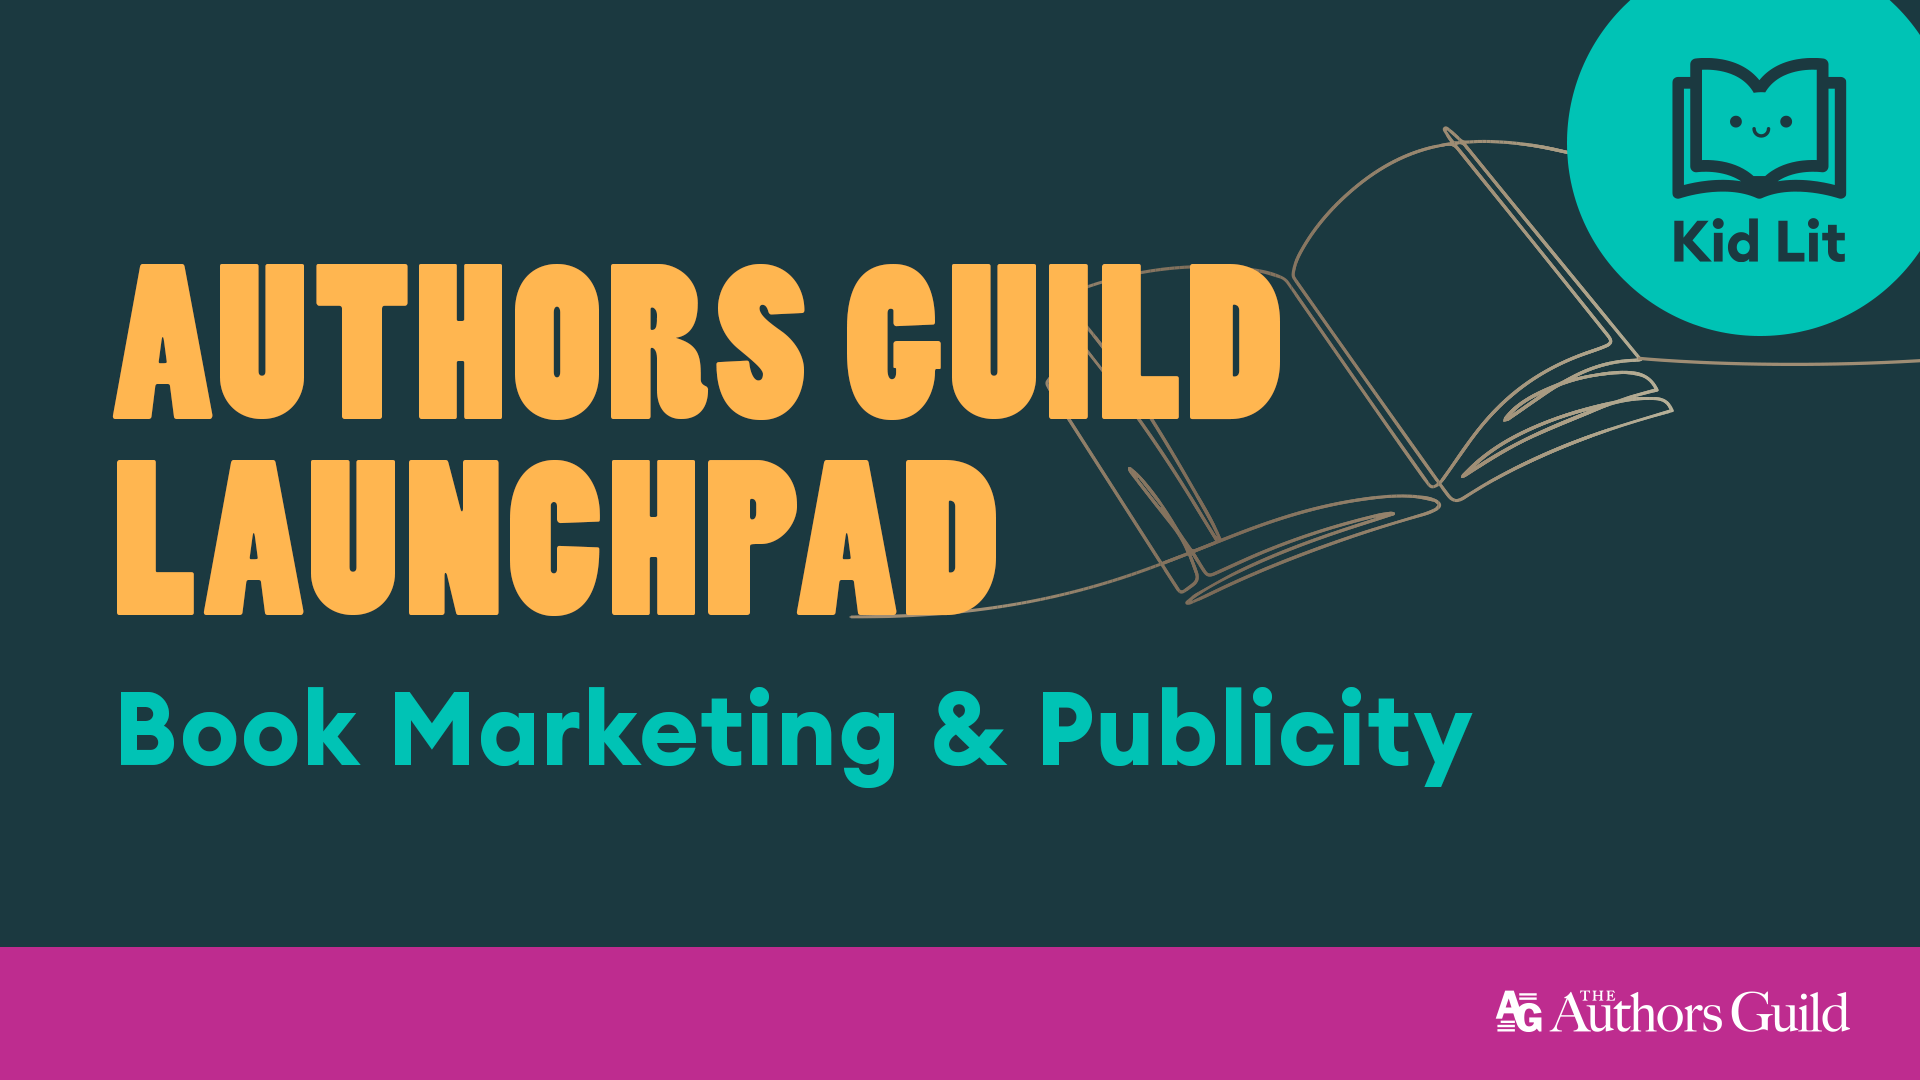 Authors Guild Launchpad Book Marketing & Publicity: Kid Lit